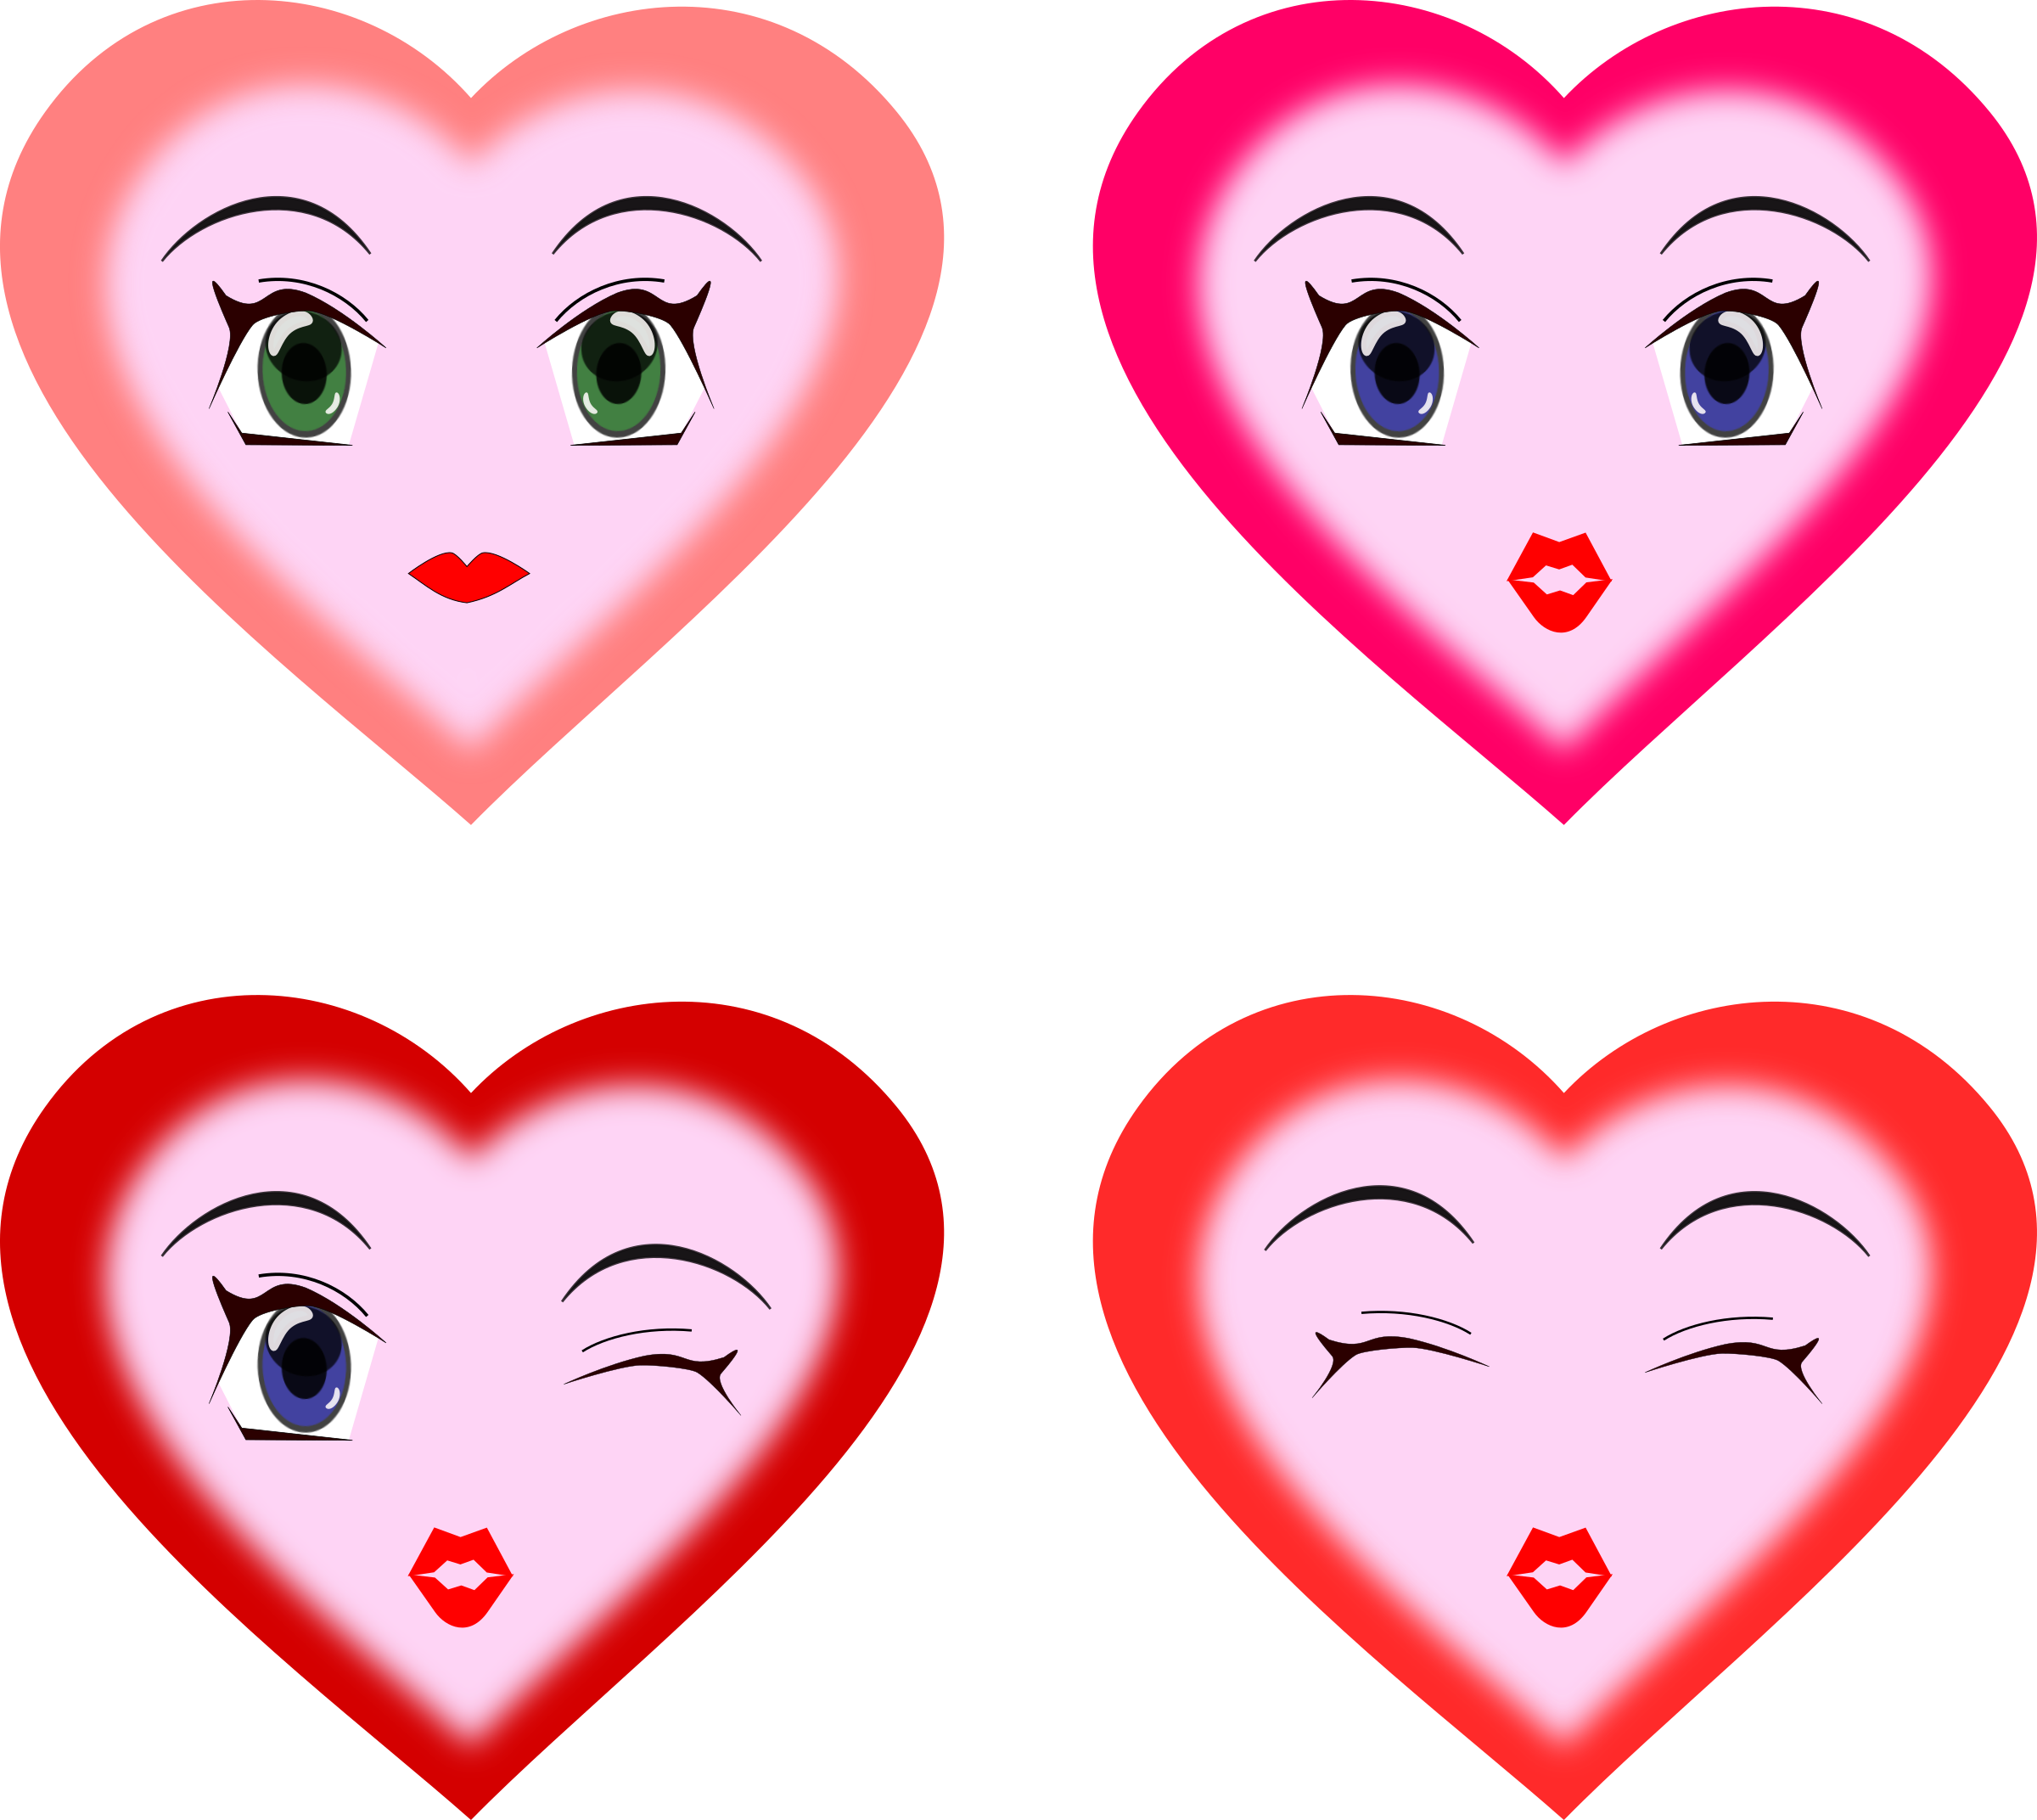 Heart Faces - Cartoon Hearts With Faces (2400x2144)